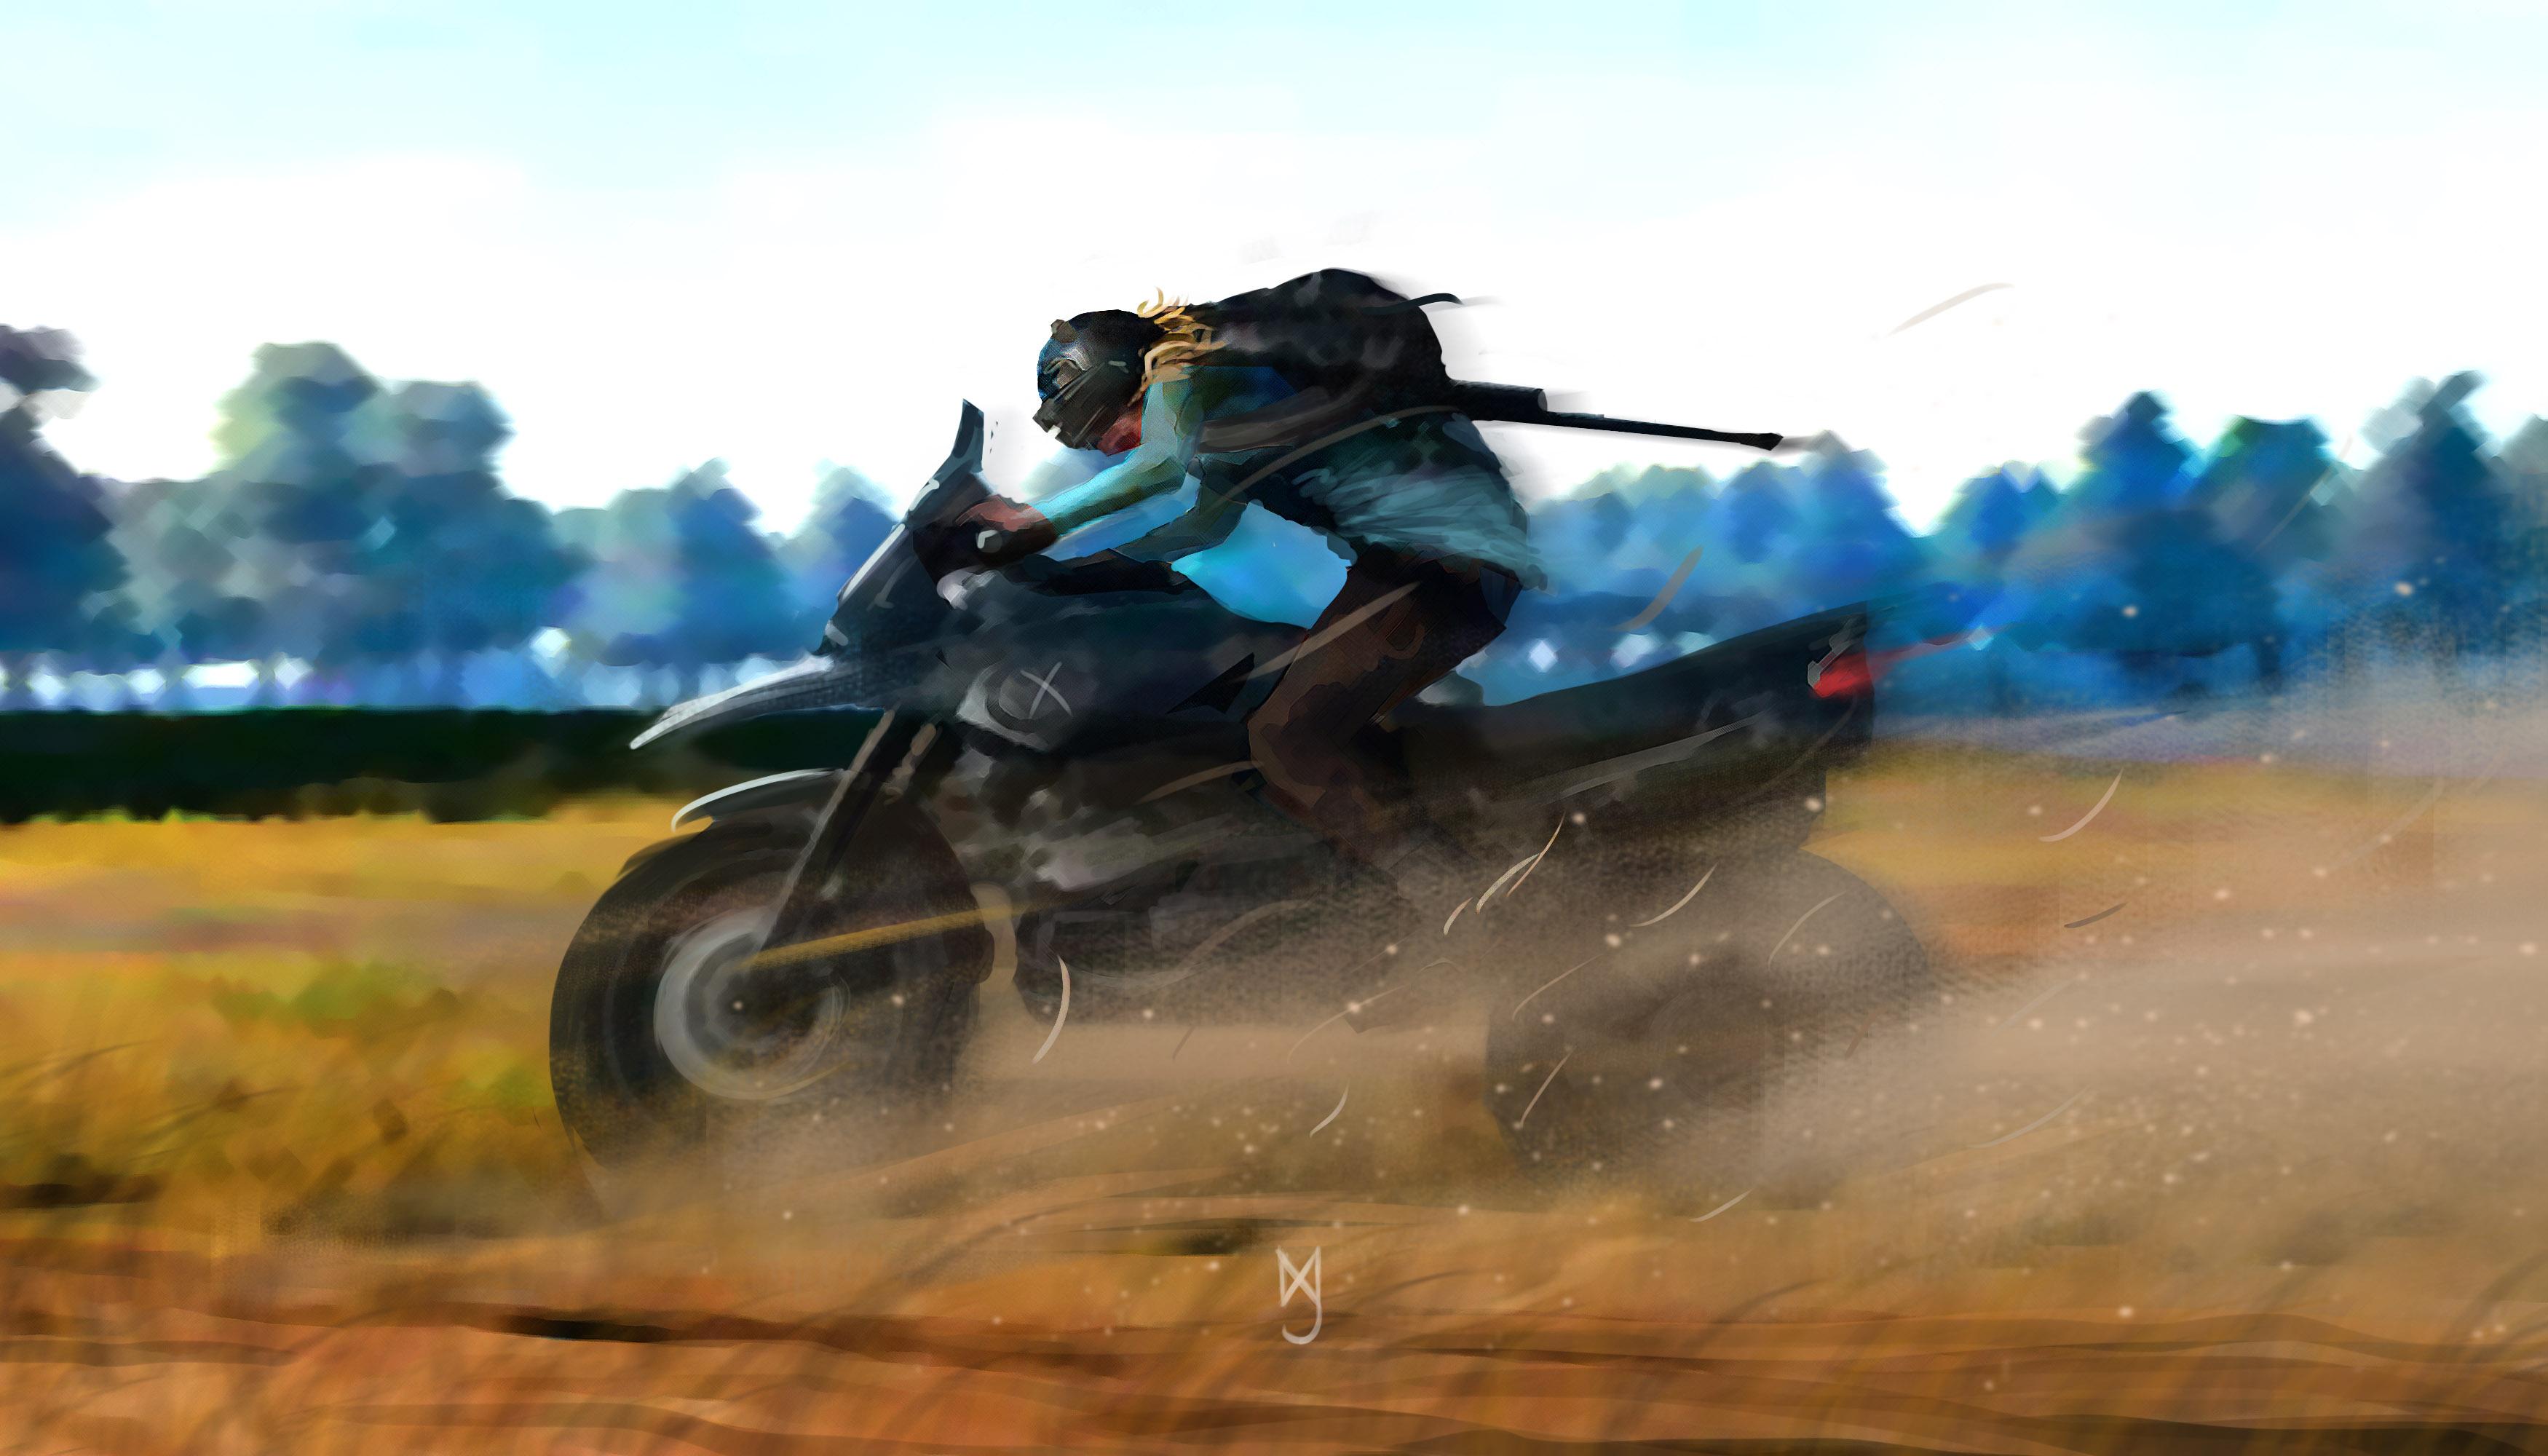 Pubg Guy On Bike, HD Games, 4k Wallpaper, Image, Background